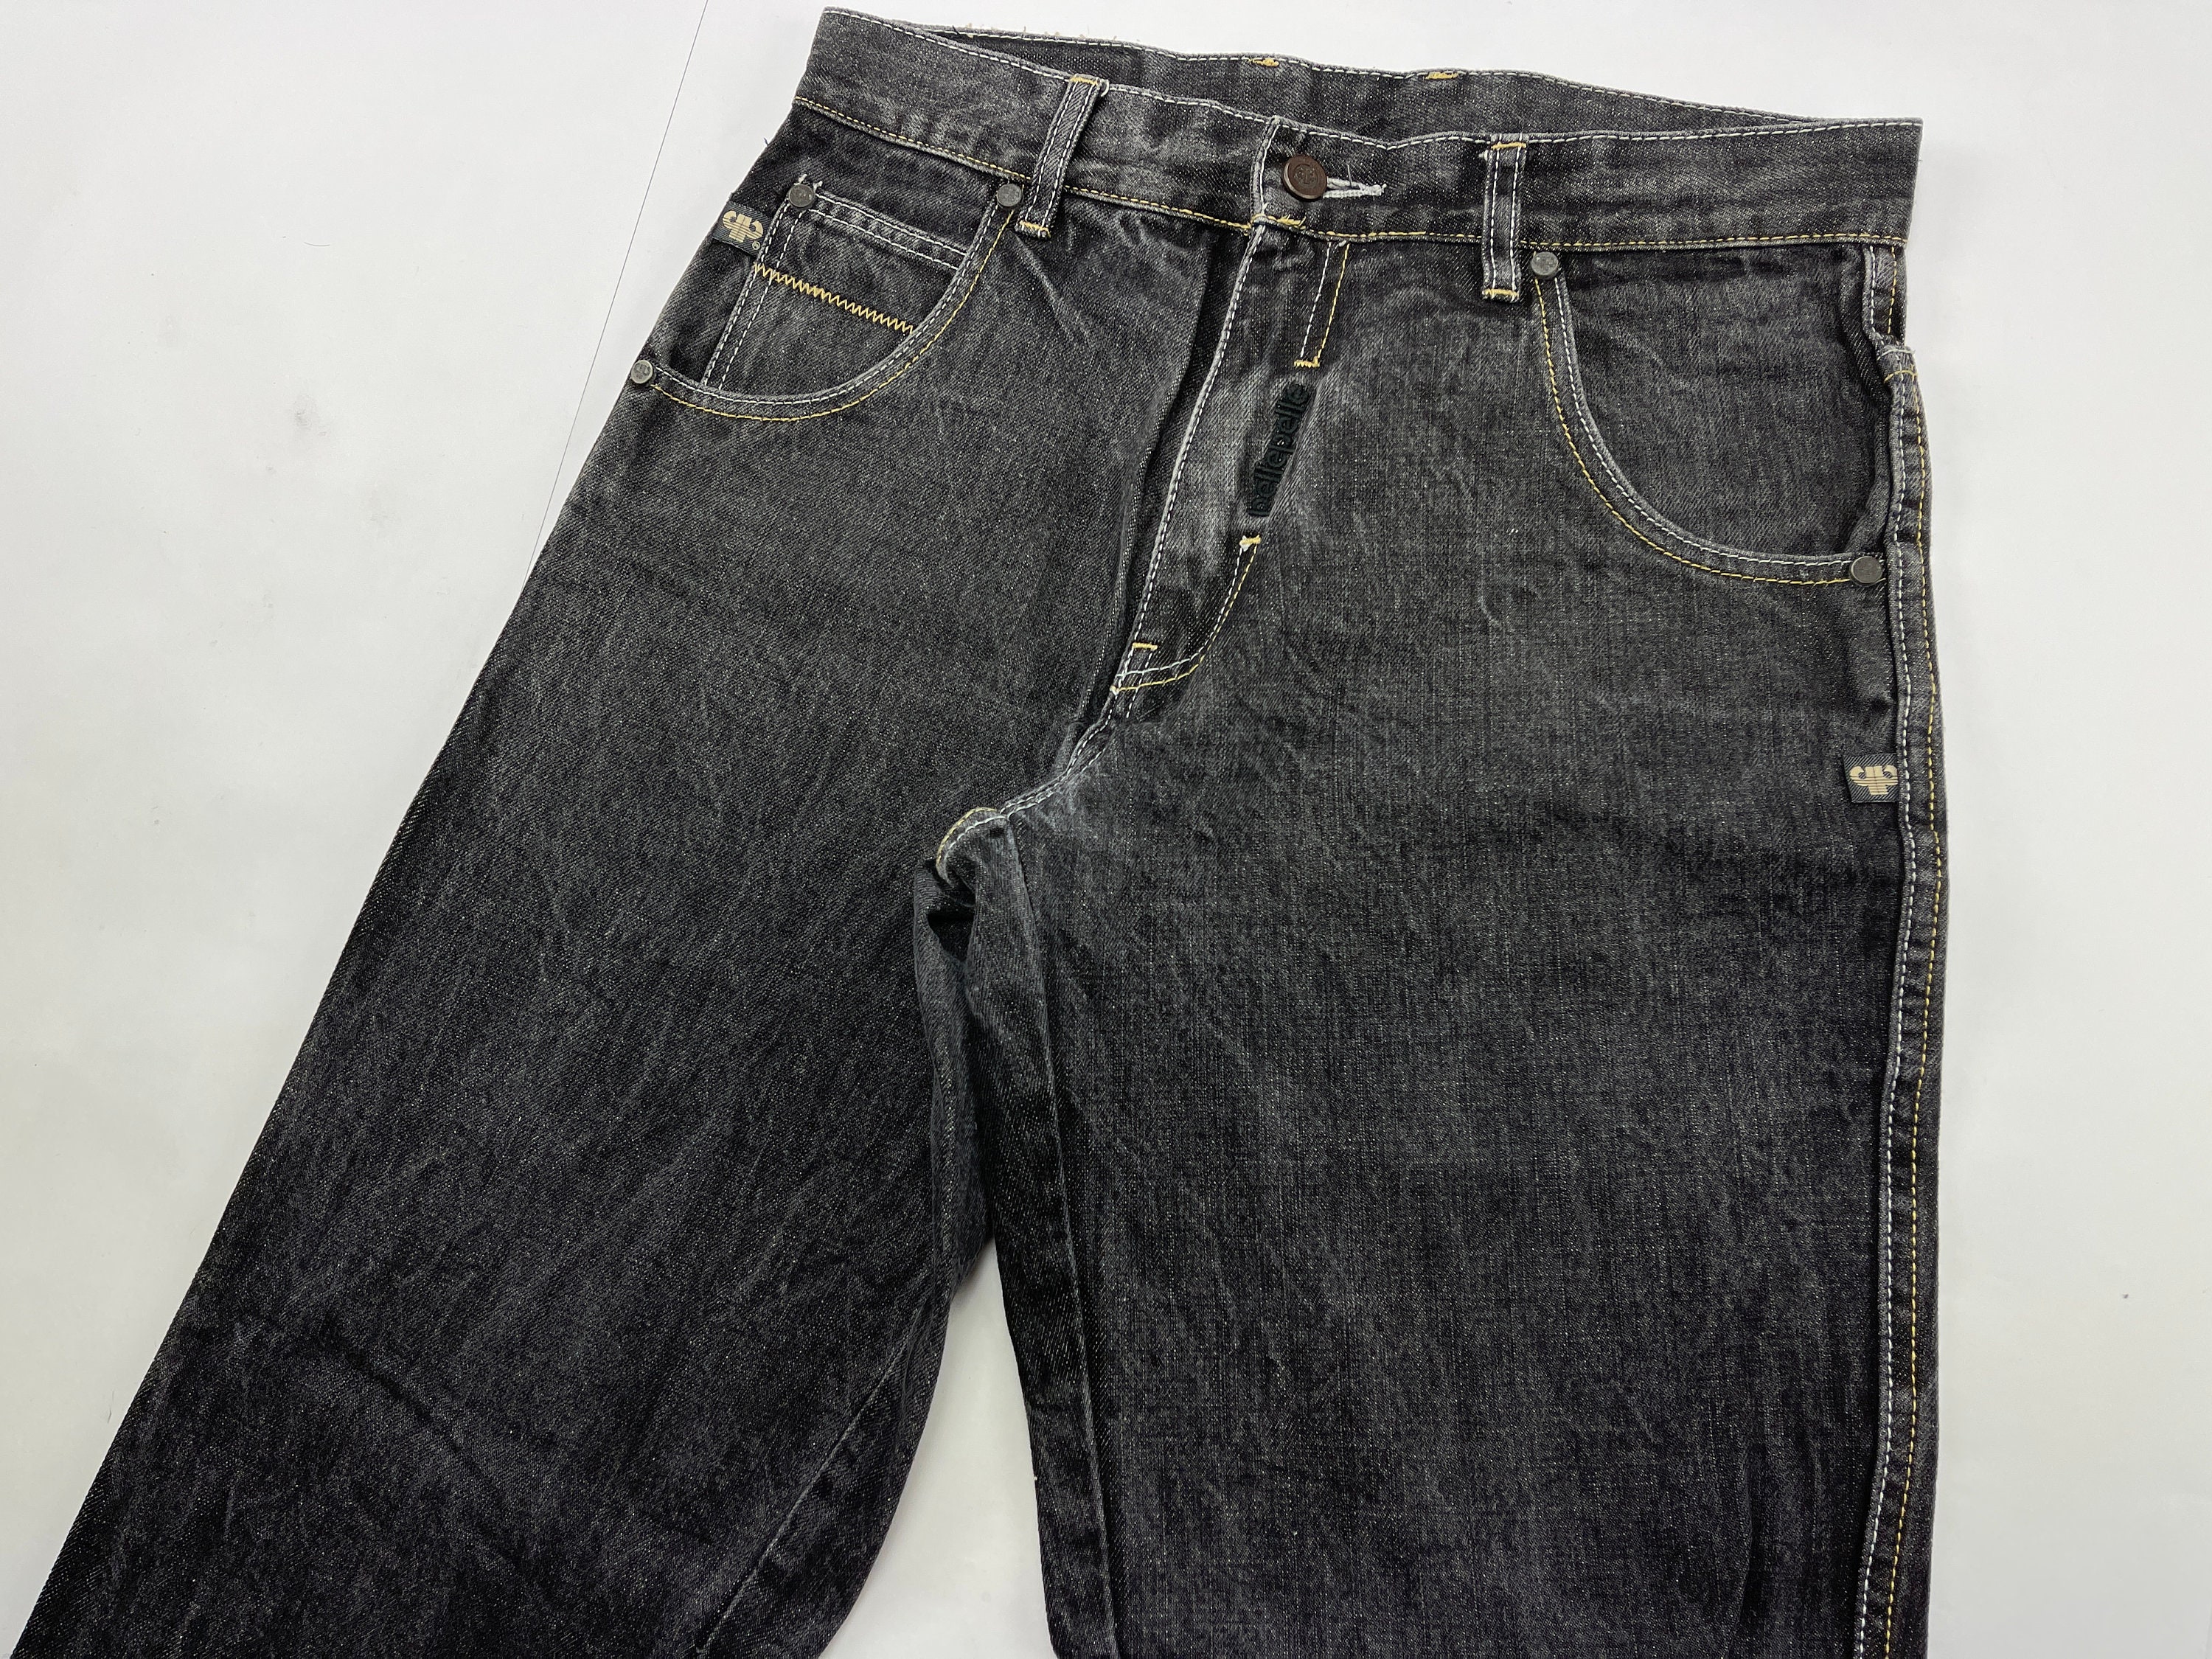 Pelle Pelle jeans black vintage baggy jeans Marc Buchanan | Etsy